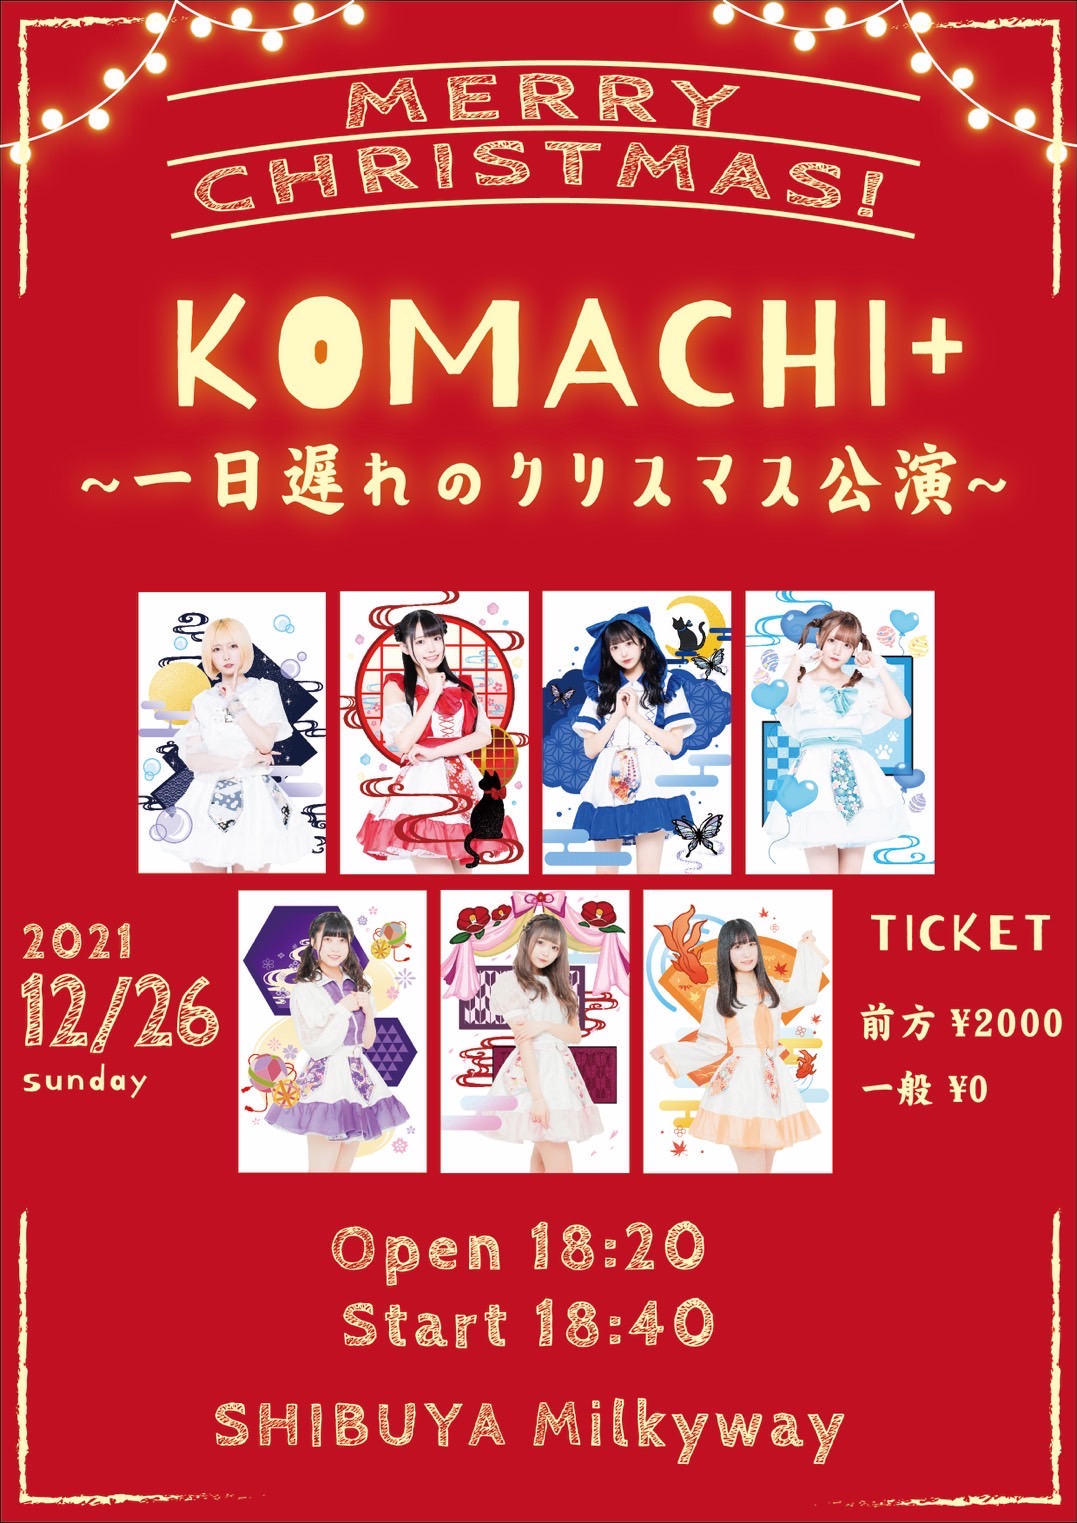 KOMACHI+1日遅れのクリスマス公演